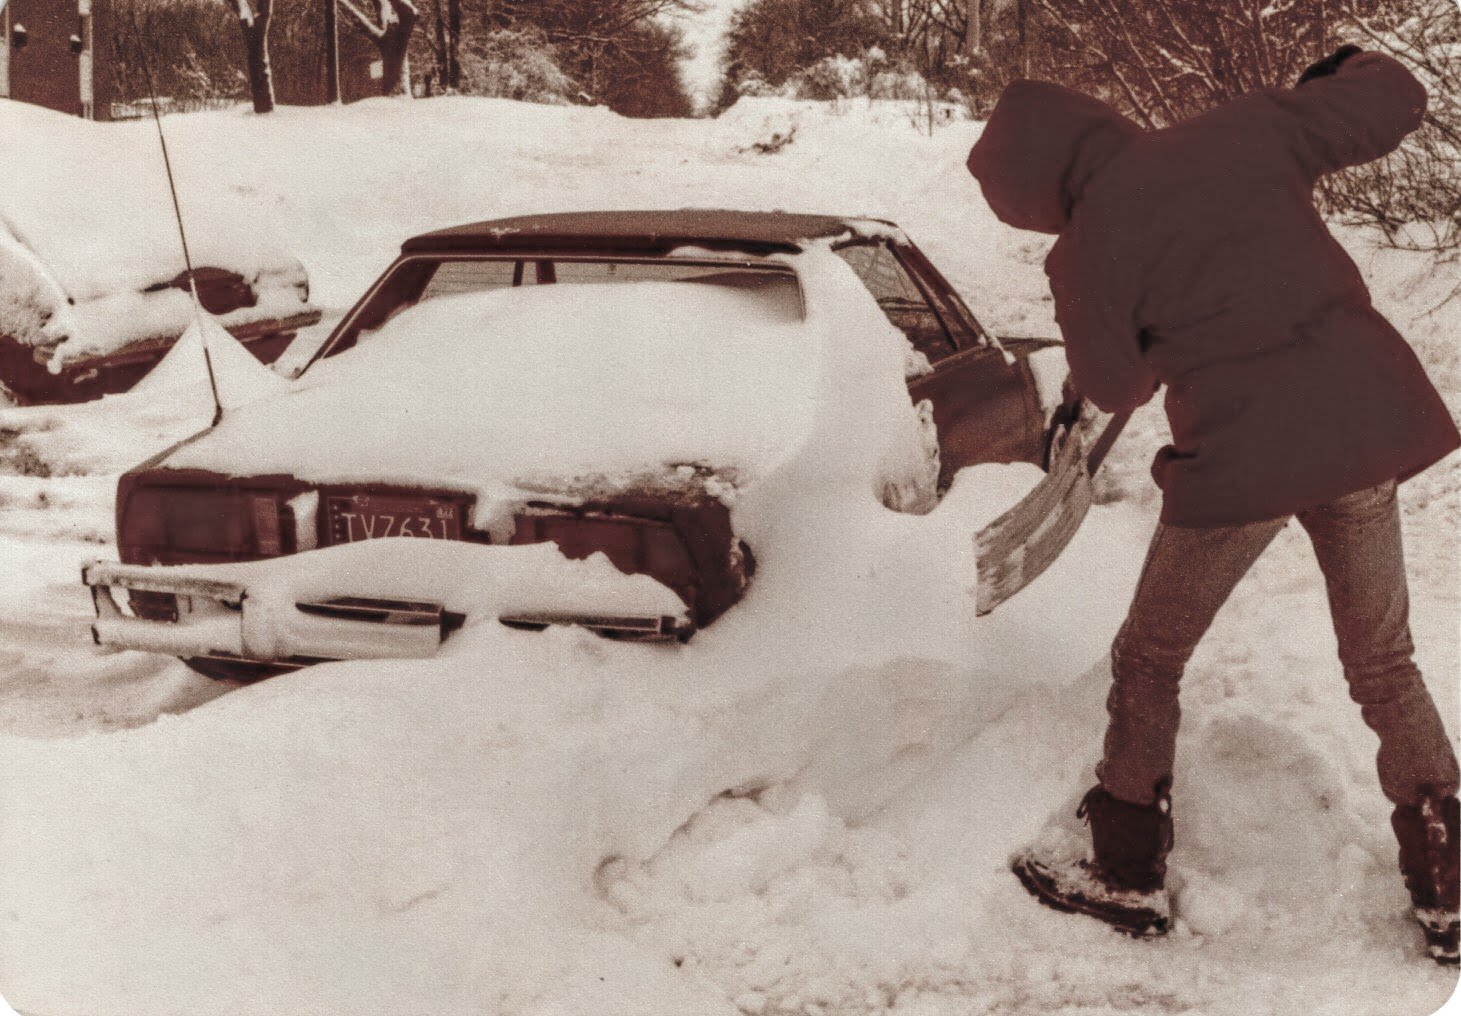 74 Fiat x1-9 snowed in